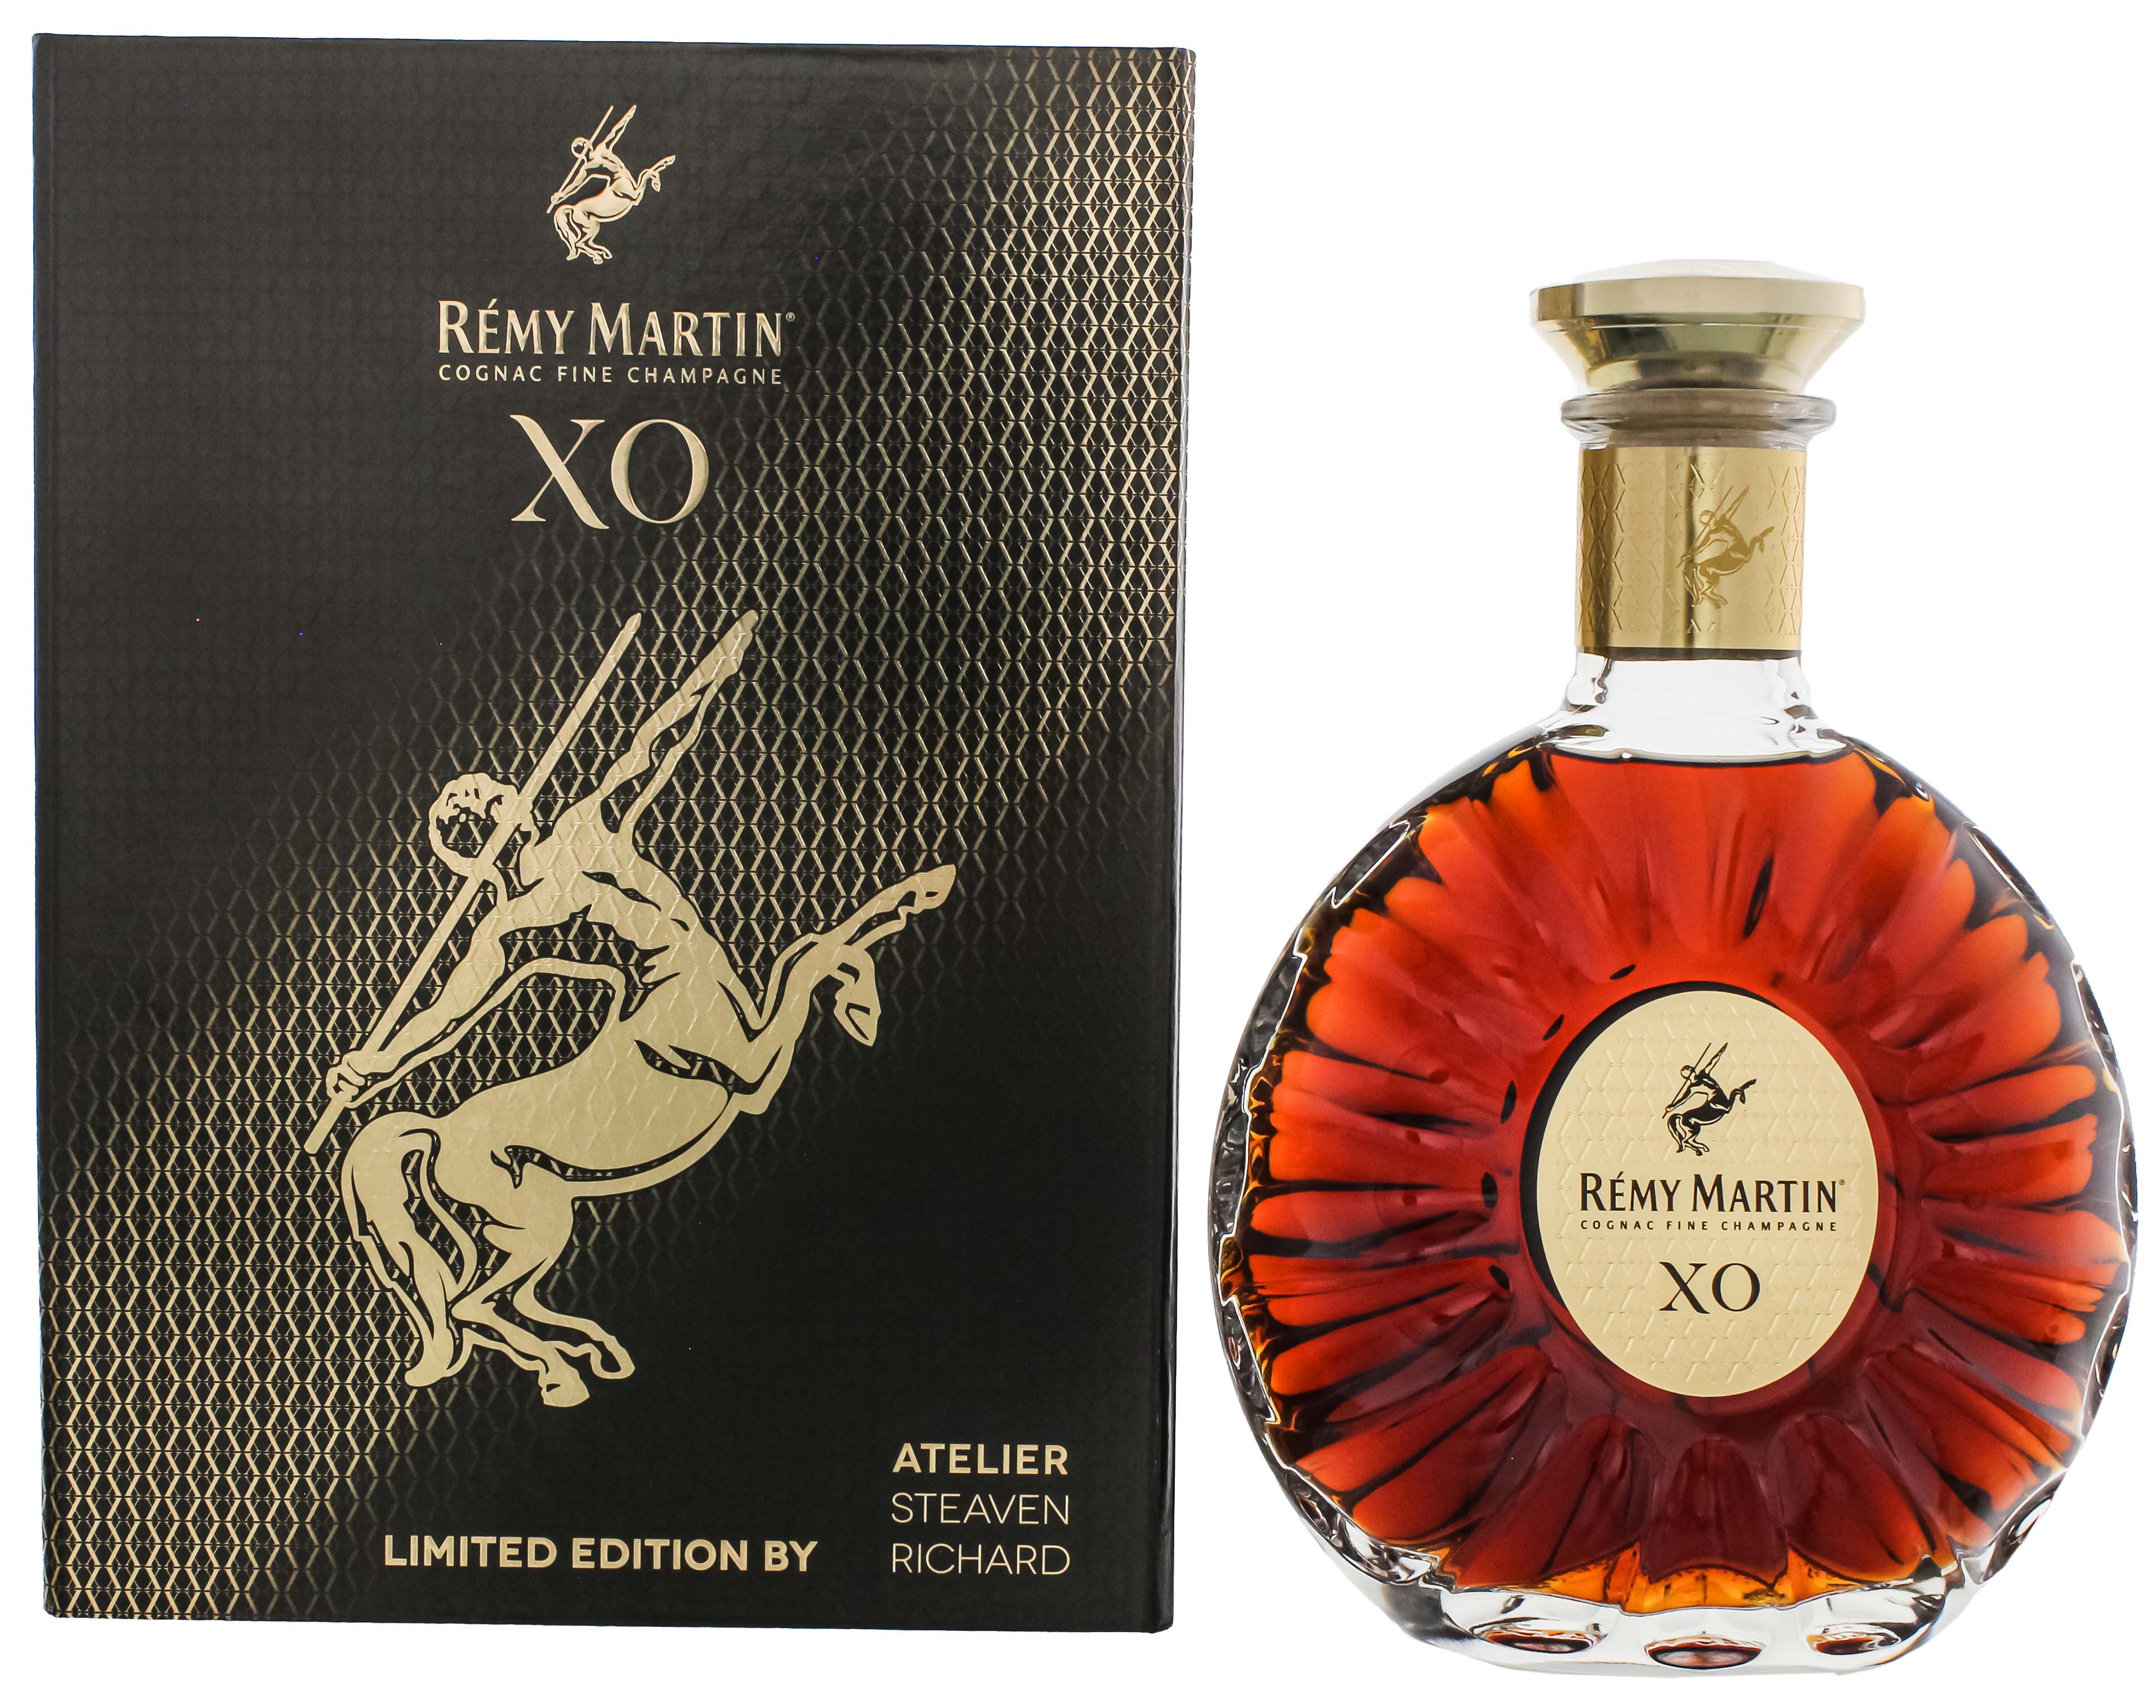 Remy Martin XO Limited Edition. Remy Martin XO 0.7. Remy martin 0.7 цена